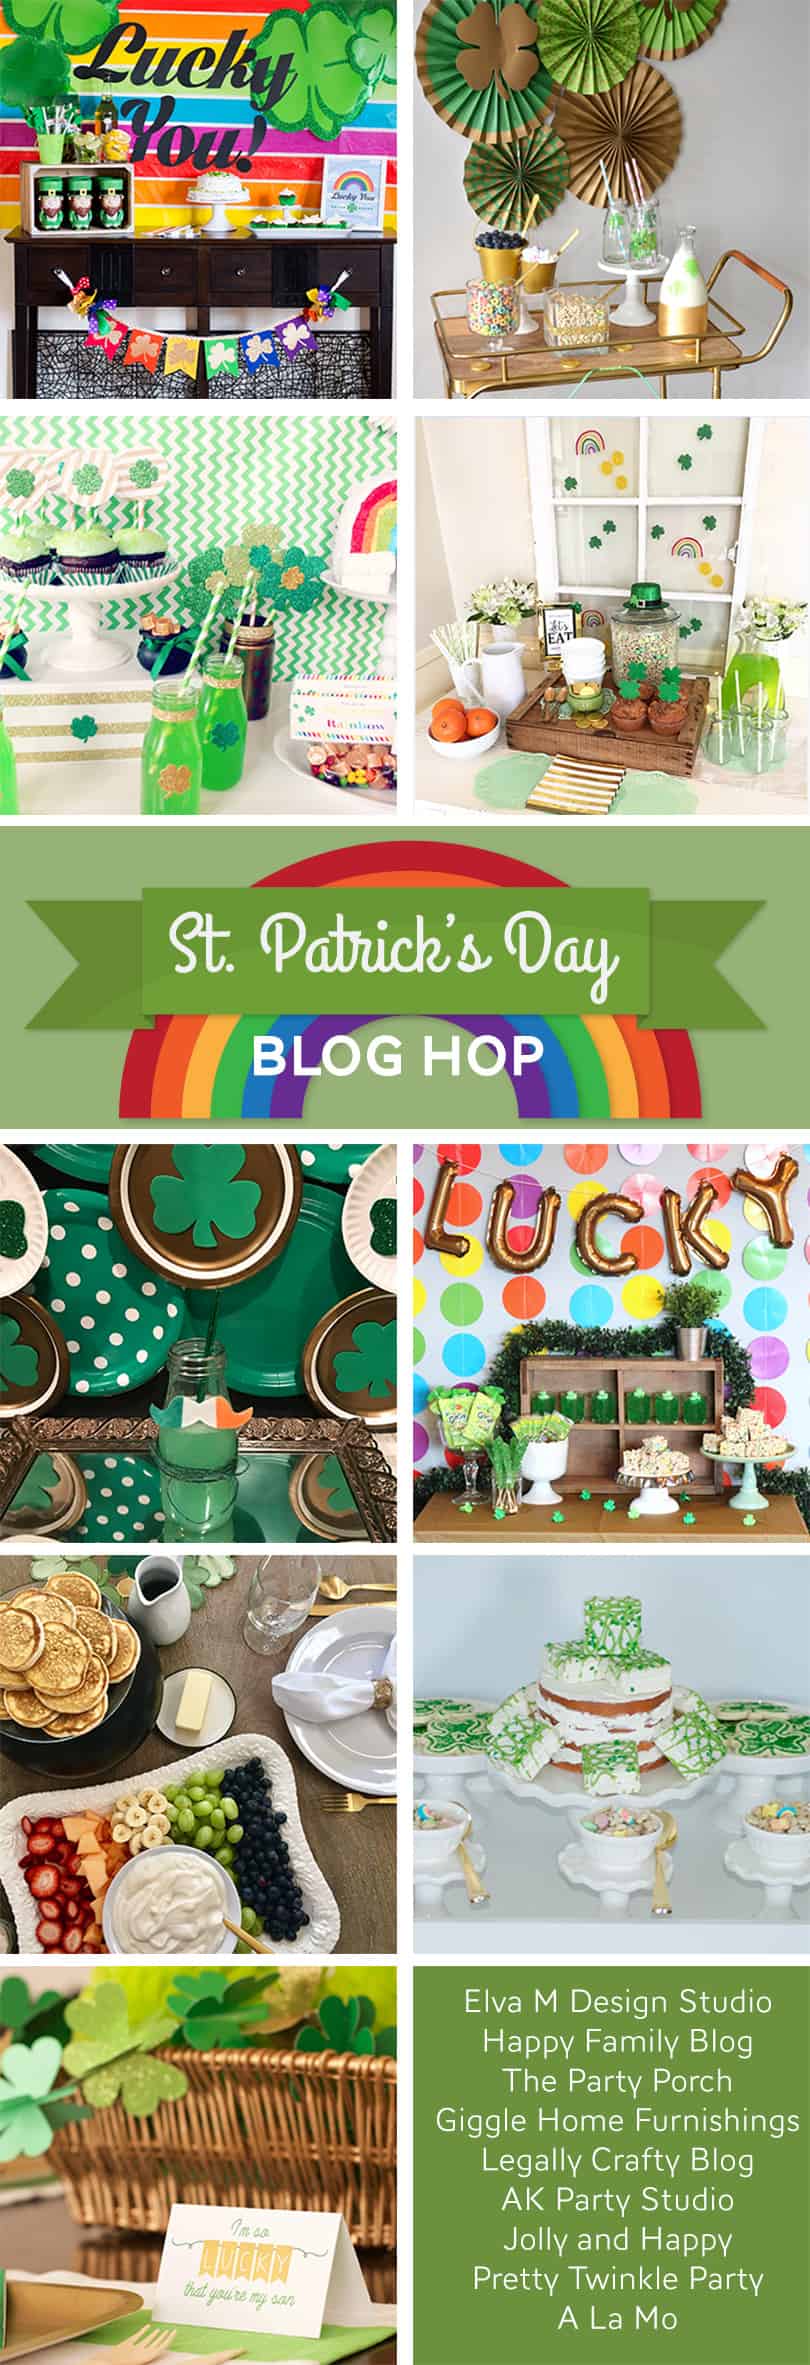 St. Patrick's Day Blog Hop Bloggers